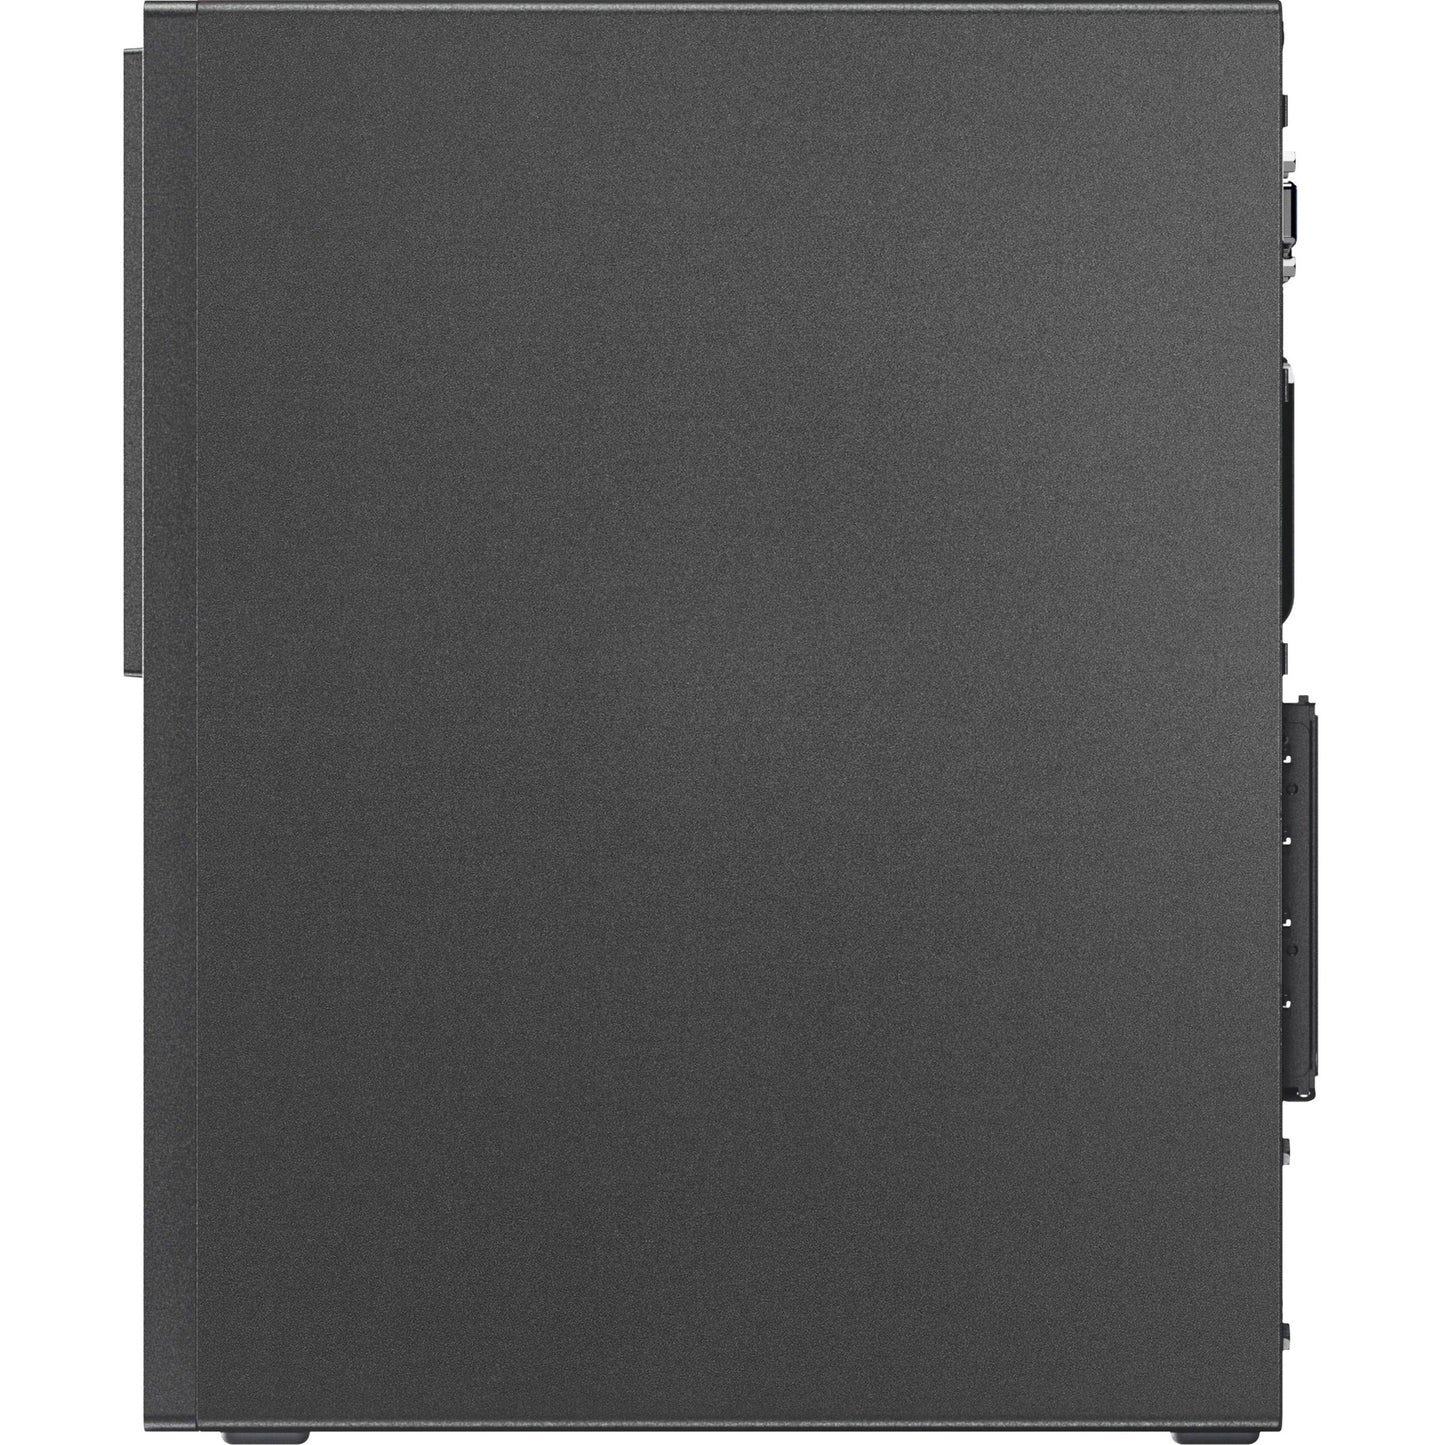 Lenovo ThinkCentre M725s 10VUS13Q00 Desktop Computer - AMD Ryzen 3 2200G 3.50 GHz - 8 GB RAM DDR4 SDRAM - 256 GB SSD - Small Form Factor